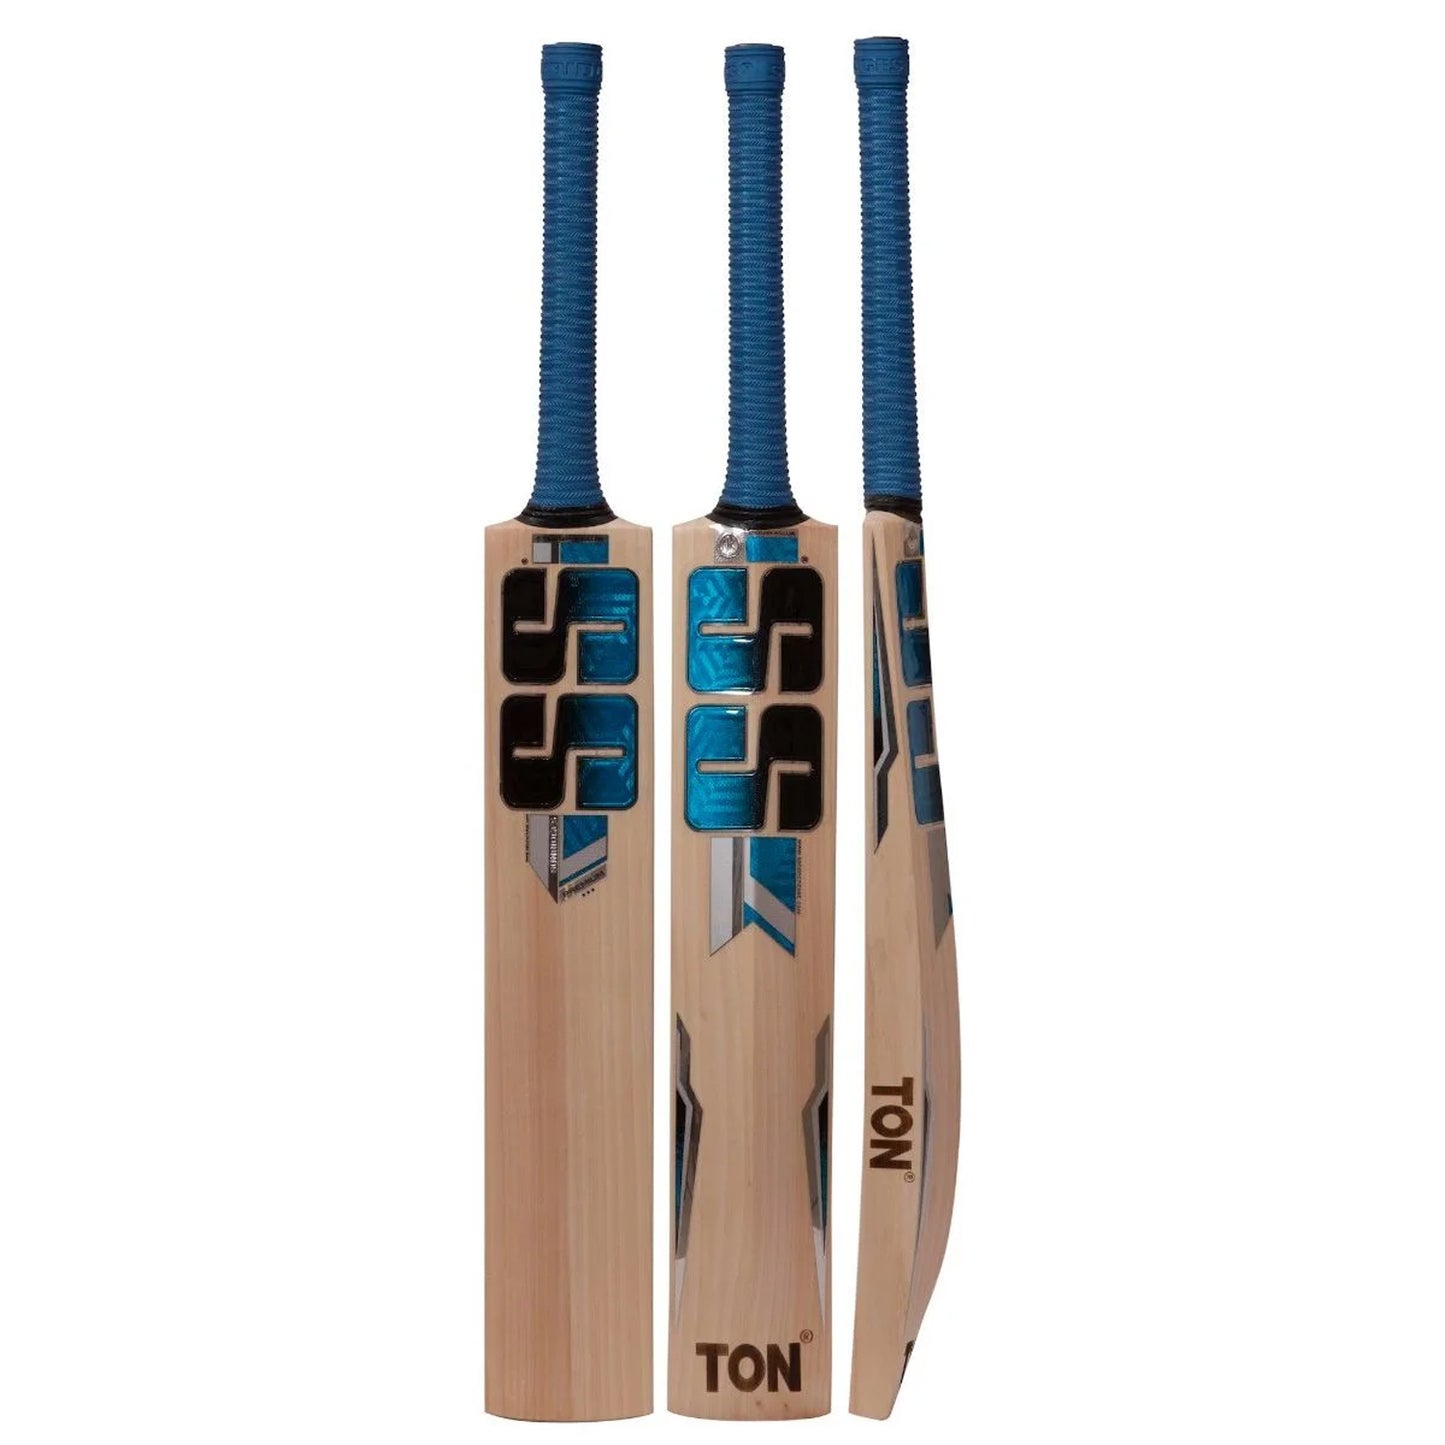 SS Premium English Willow Cricket Bat - Best Price online Prokicksports.com